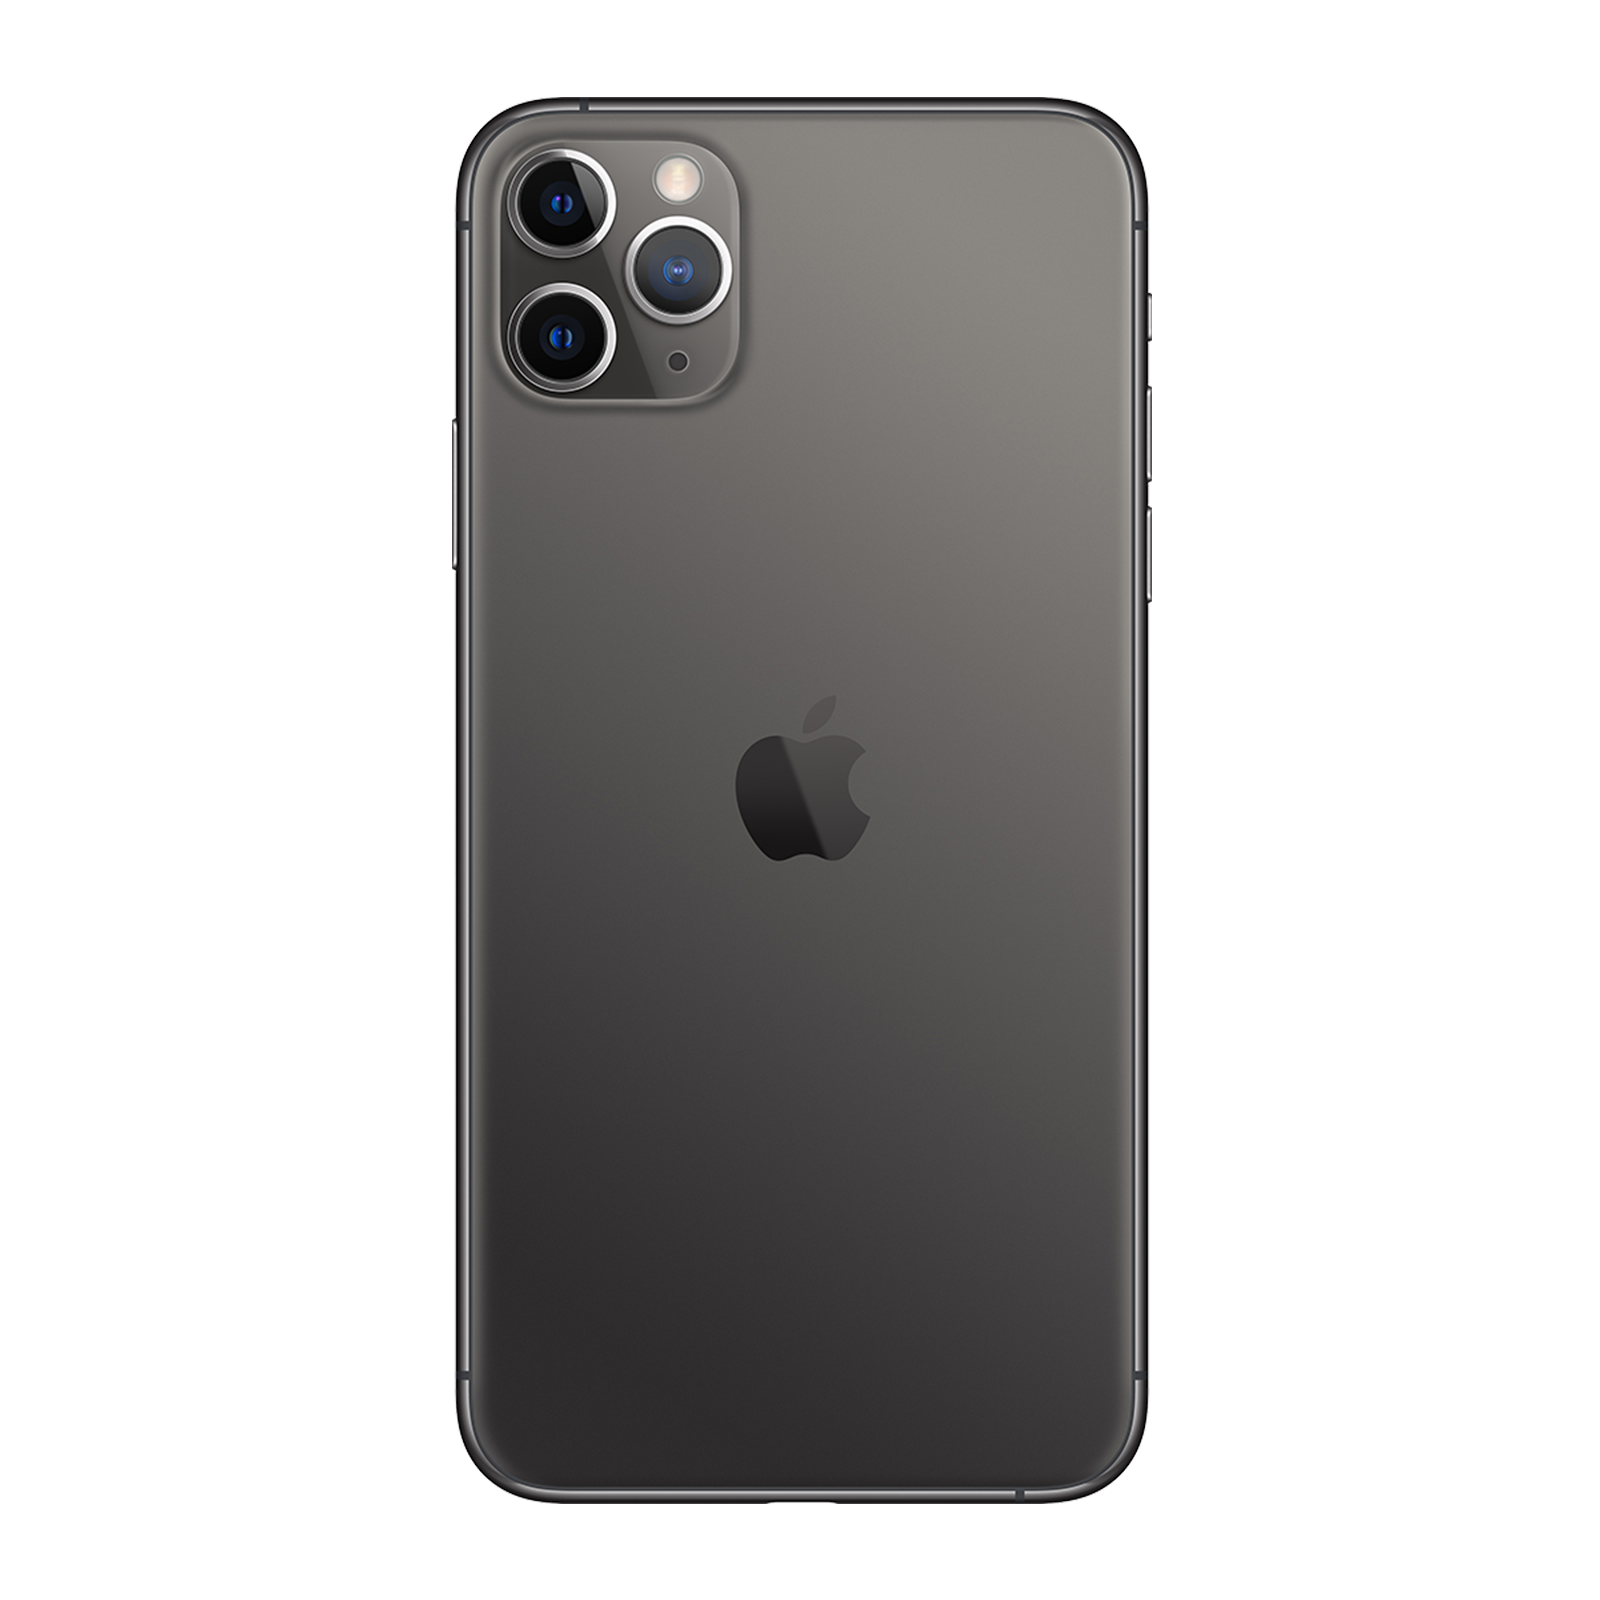 iPhone 11 Pro 256GB Space Grey Very Good -  - Unlocked